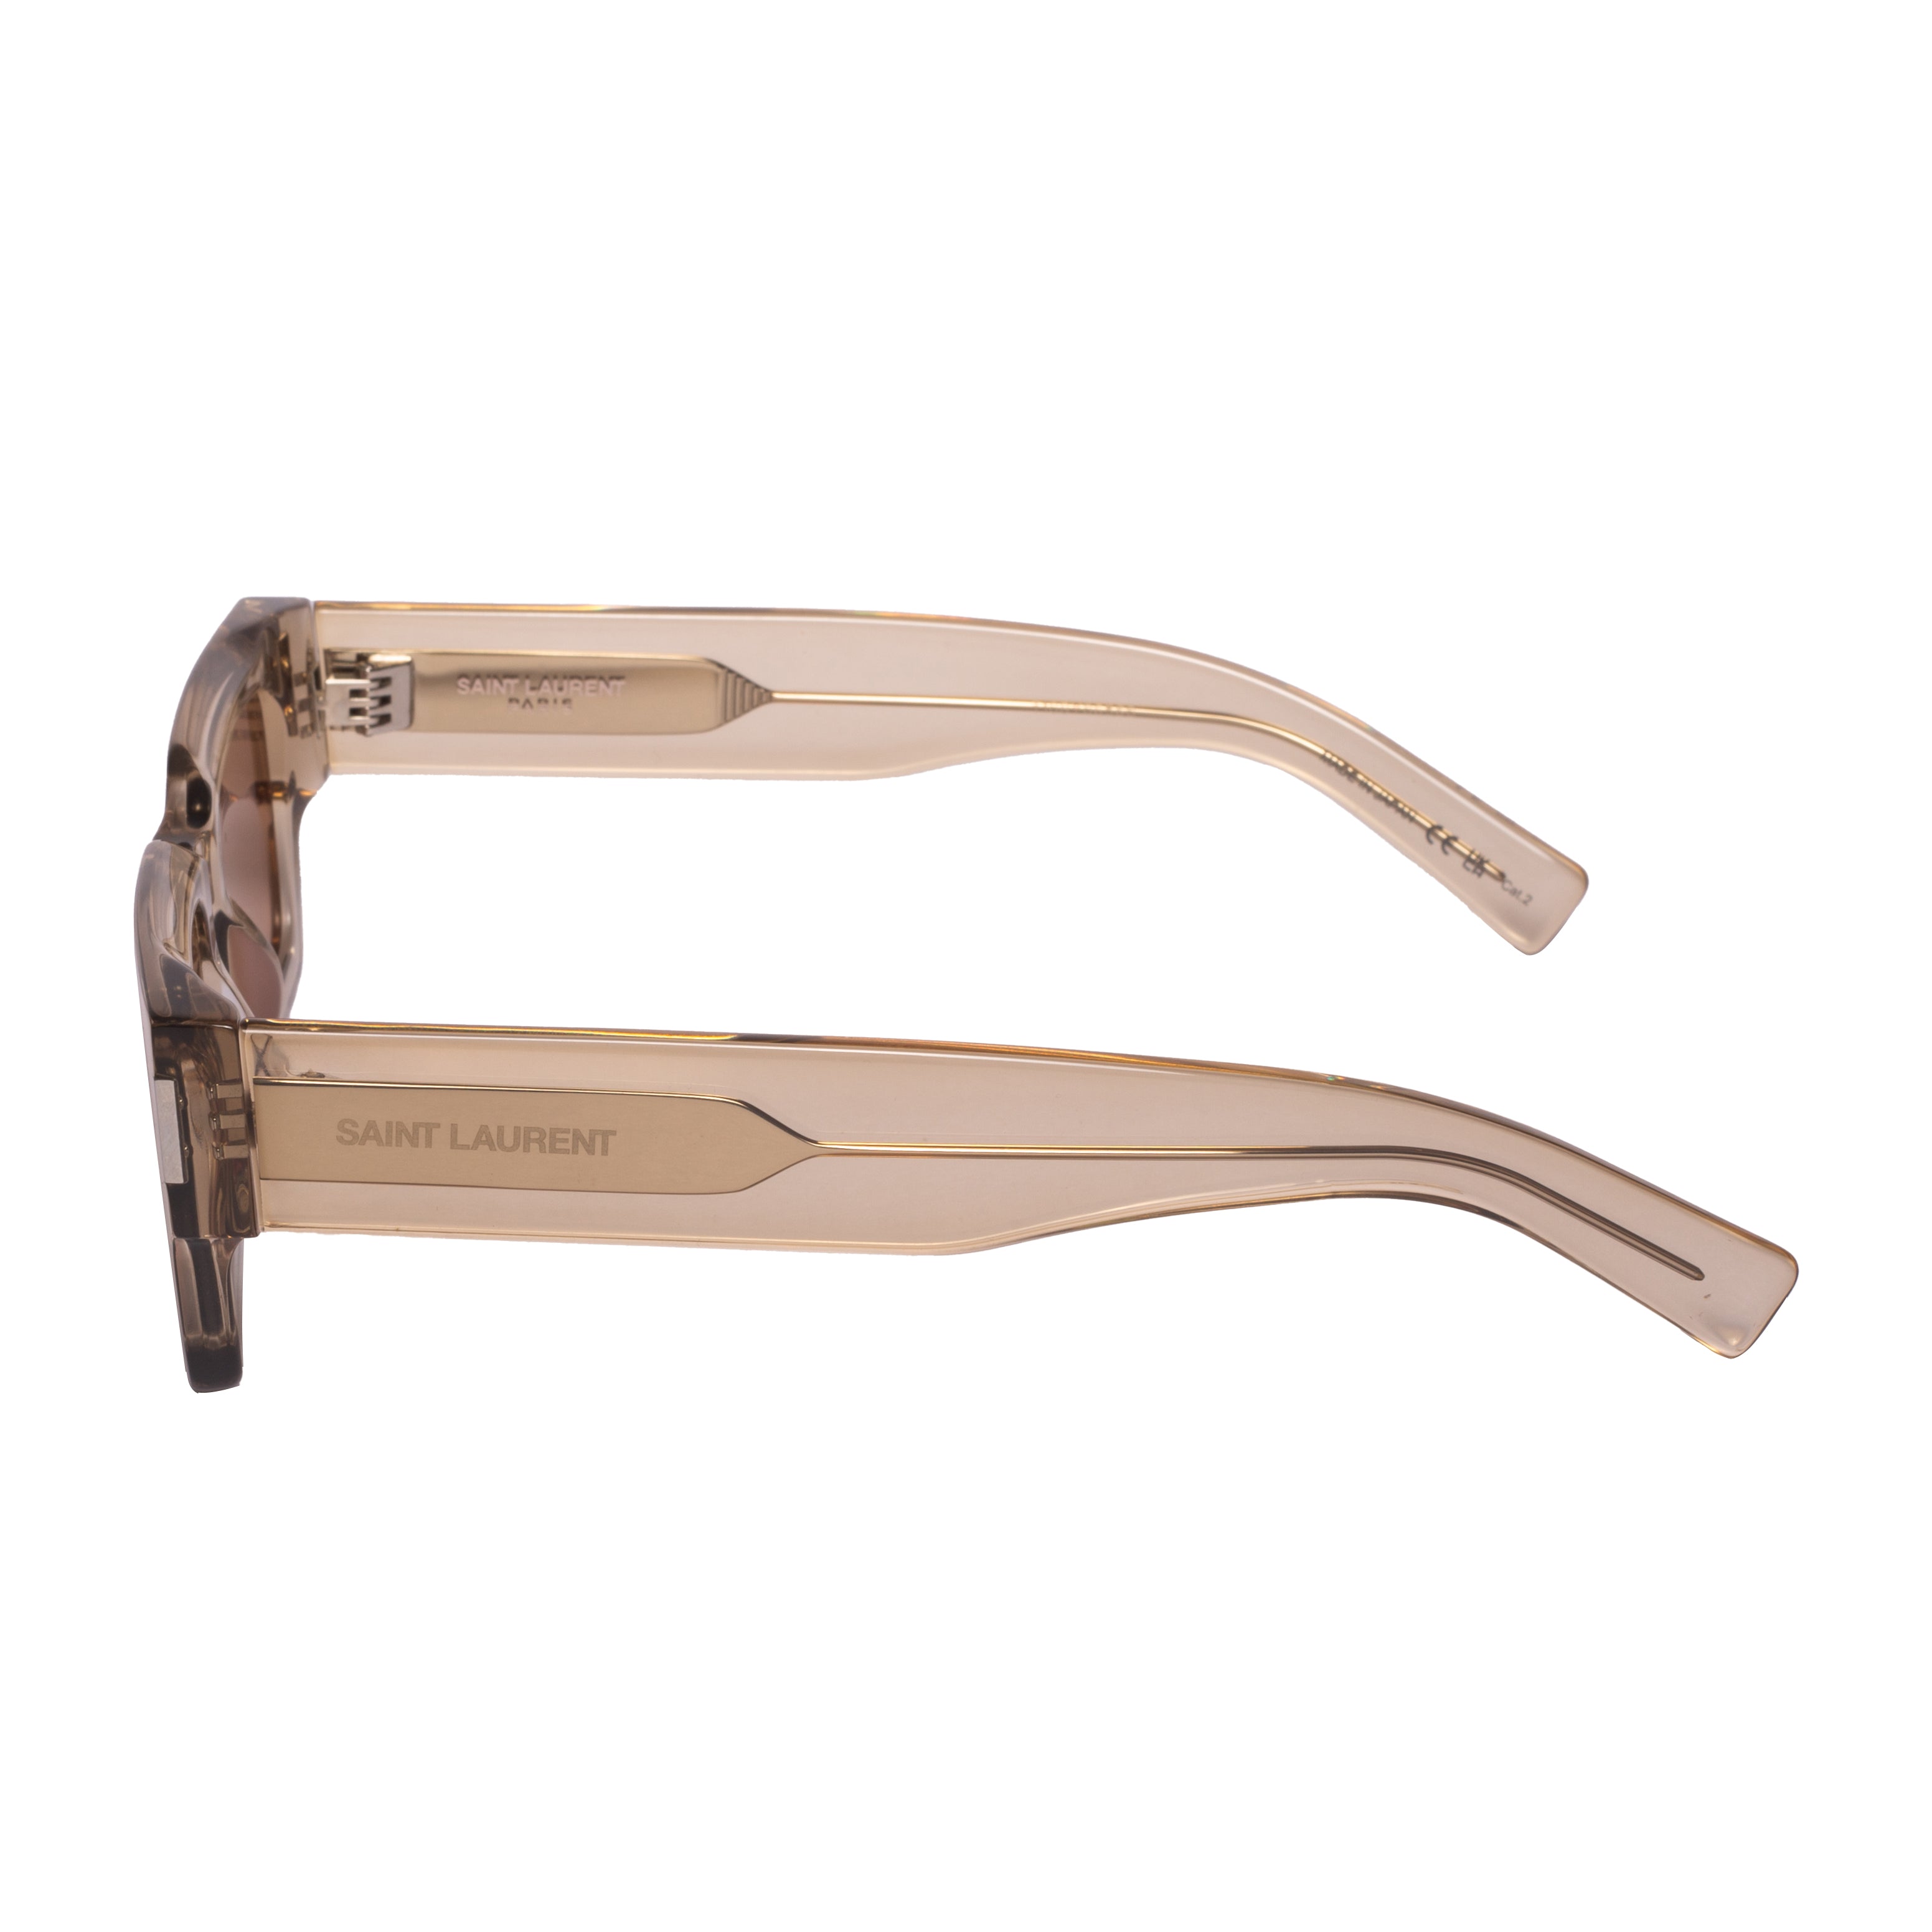 Saint Laurent-SL 572-50-006 Sunglasses - Premium Sunglasses from Saint Laurent - Just Rs. 30220! Shop now at Laxmi Opticians